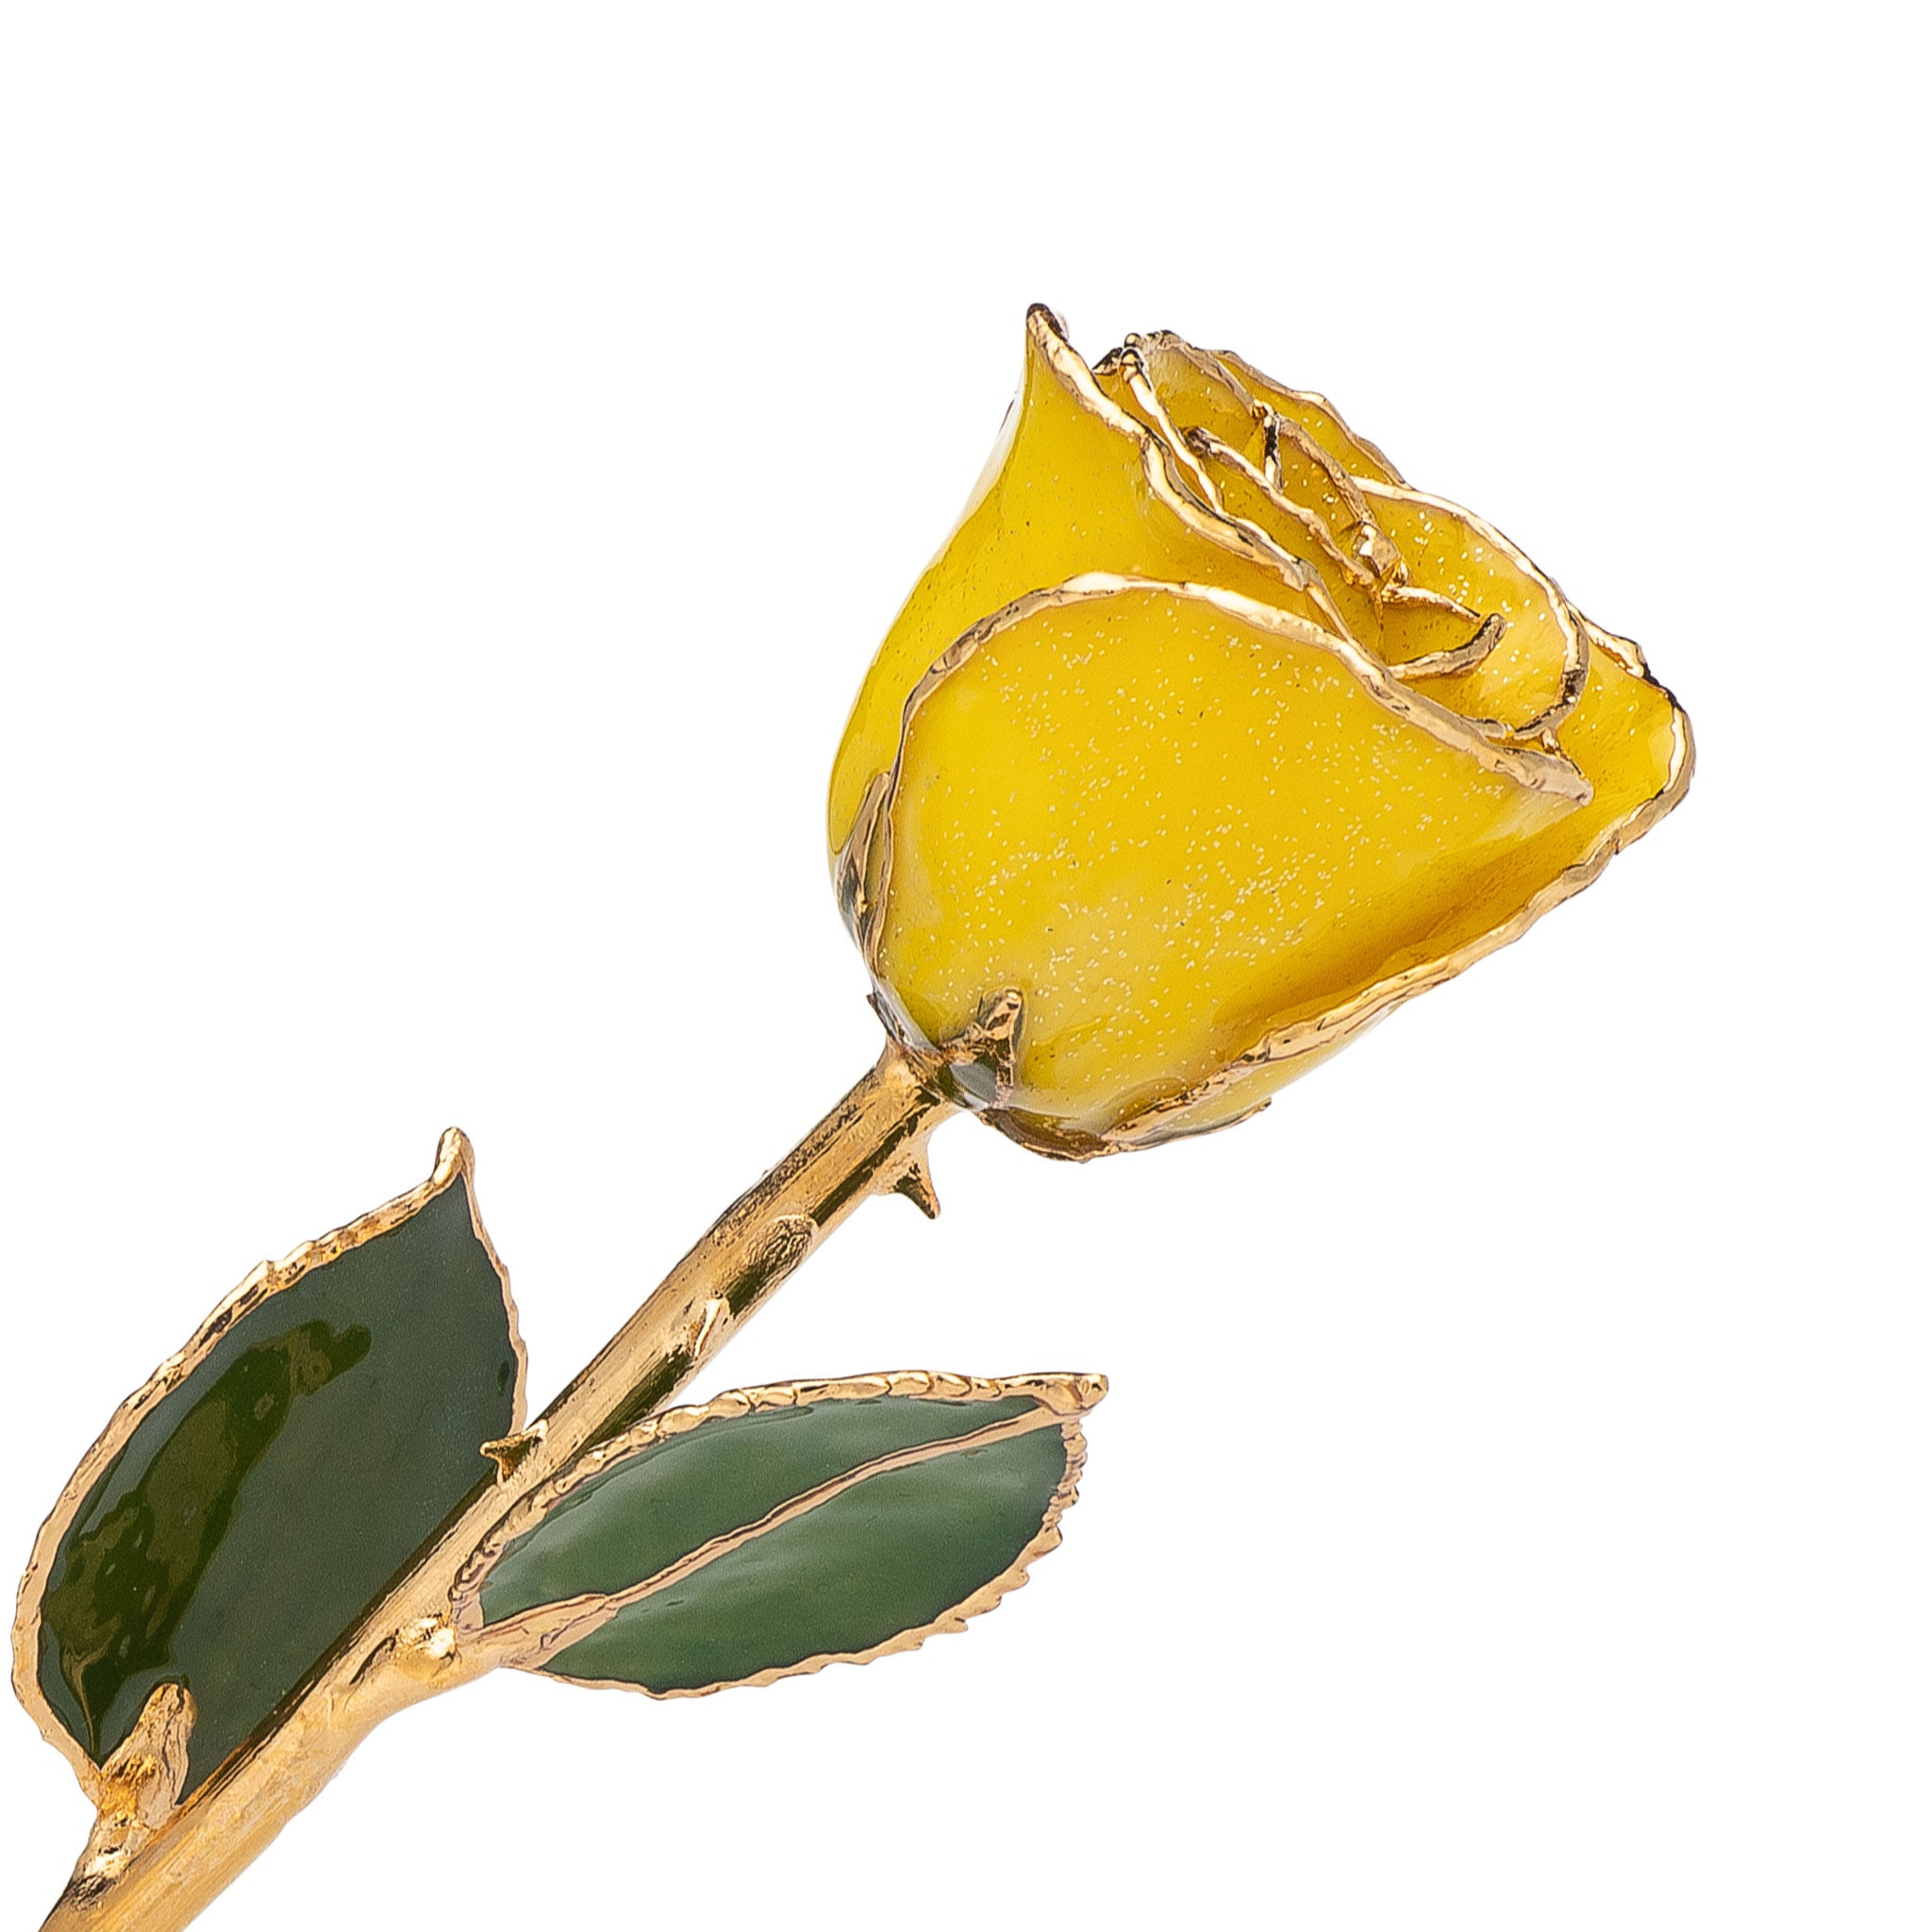 24K Gold Forever Rose - Yellow Sparkle - The Forever Rose